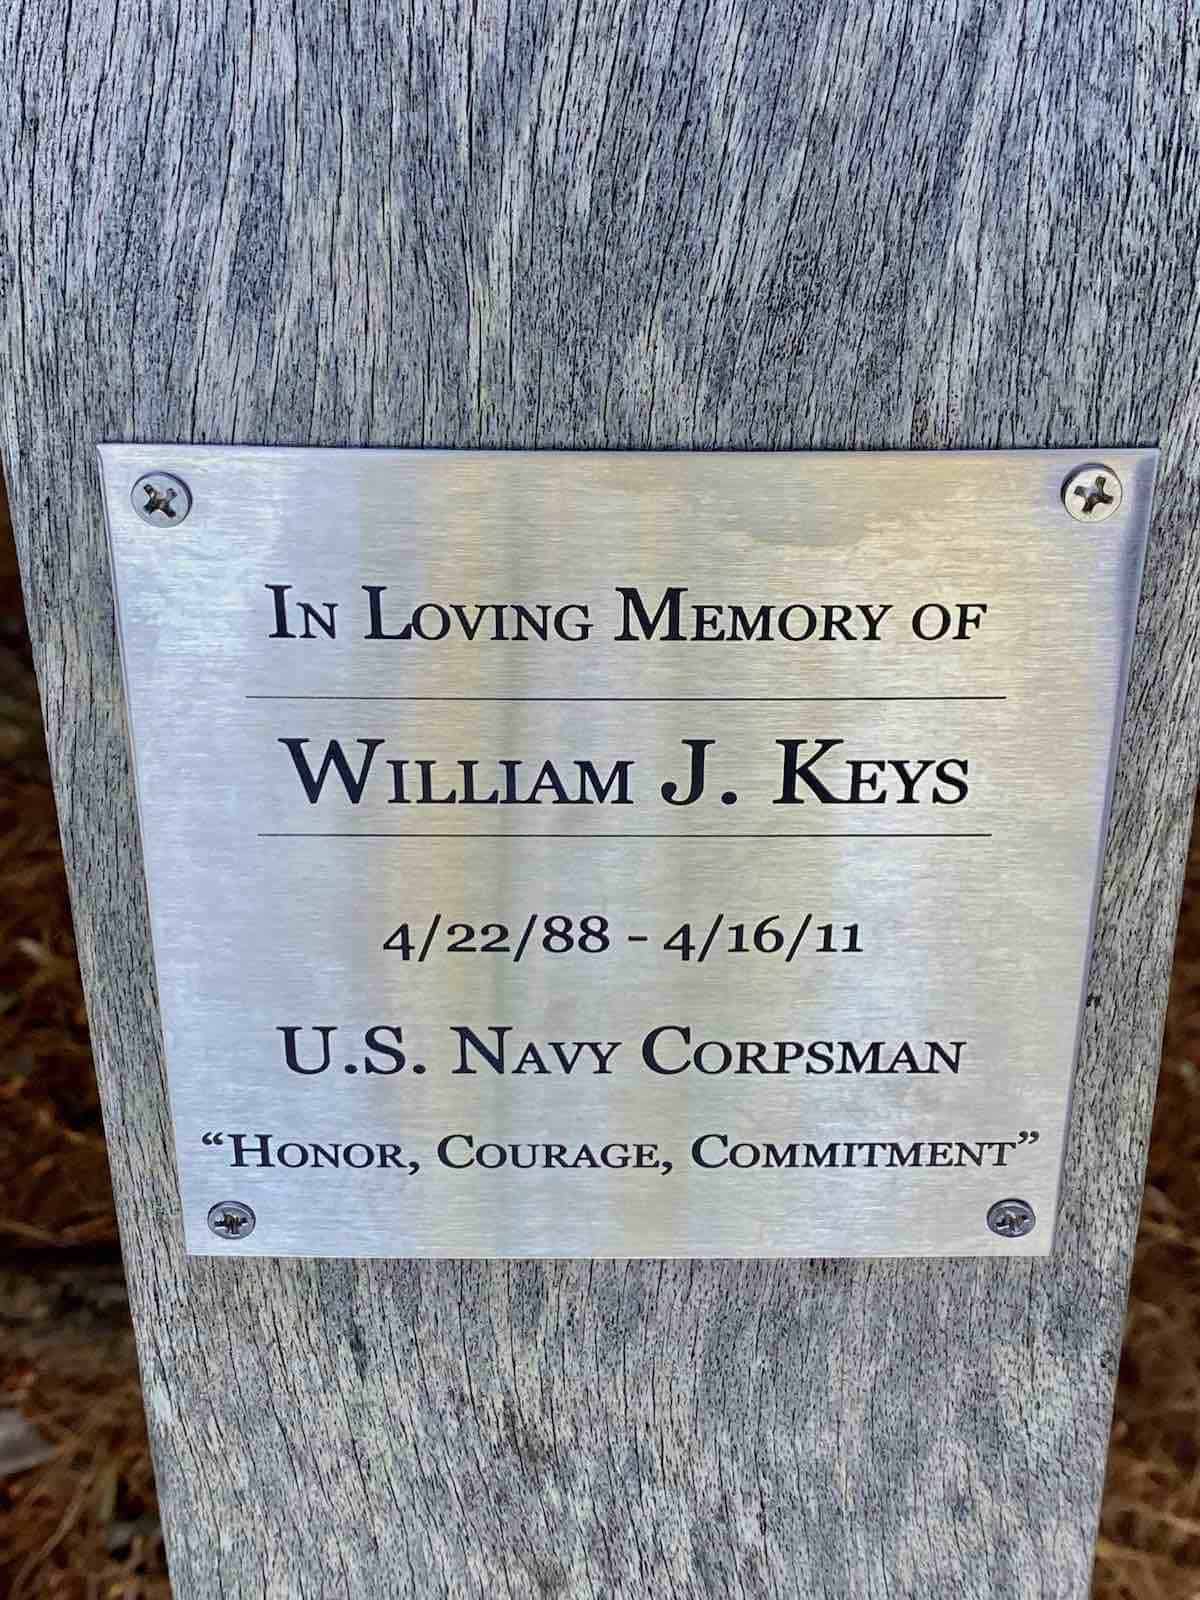 The memorial plaque in loving memory of William J. Keys.